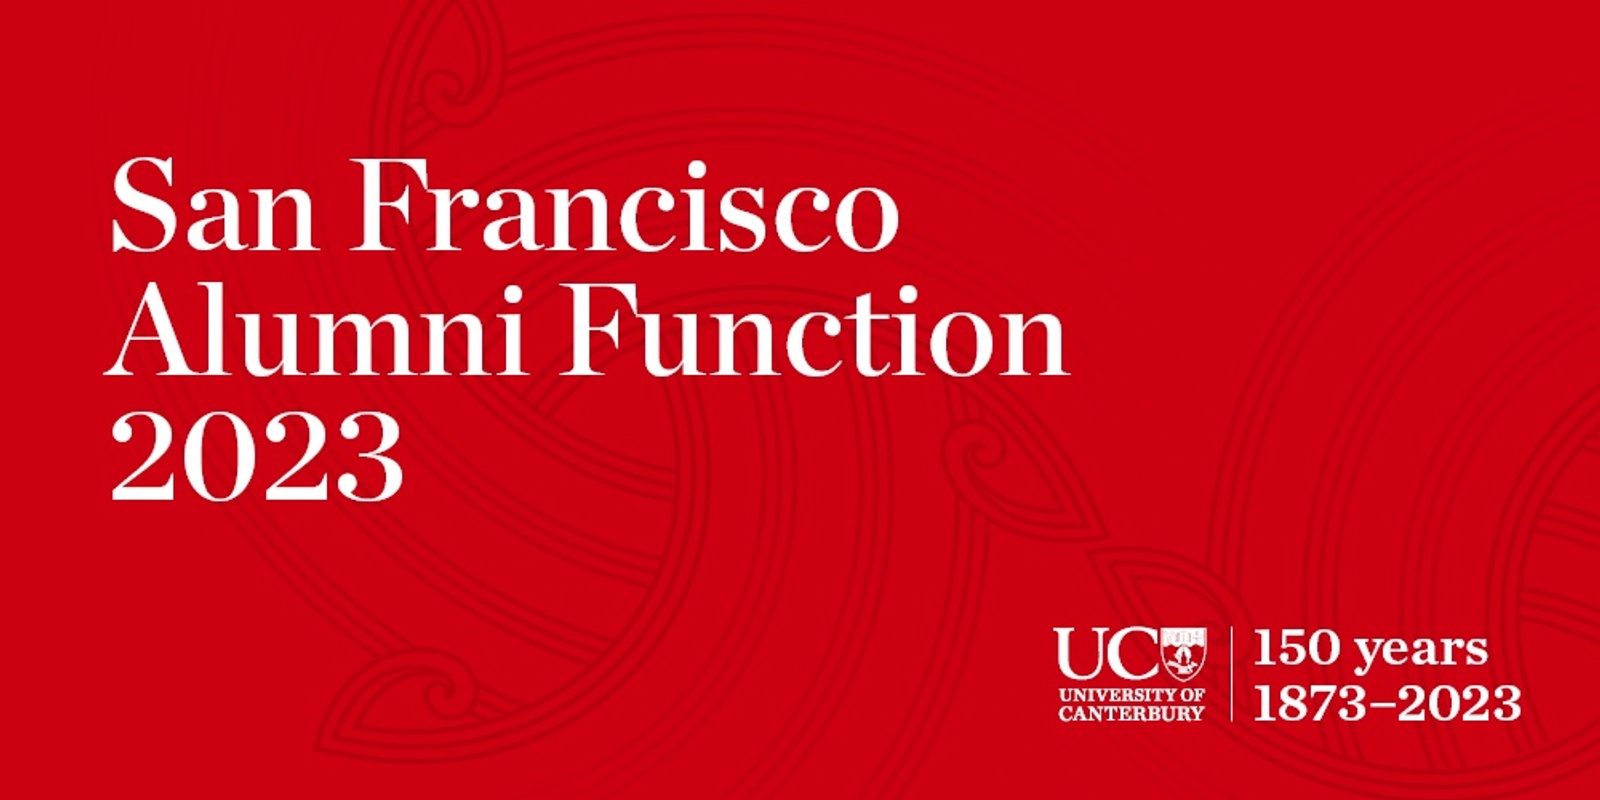 Banner image for UC Alumni Function in San Francisco